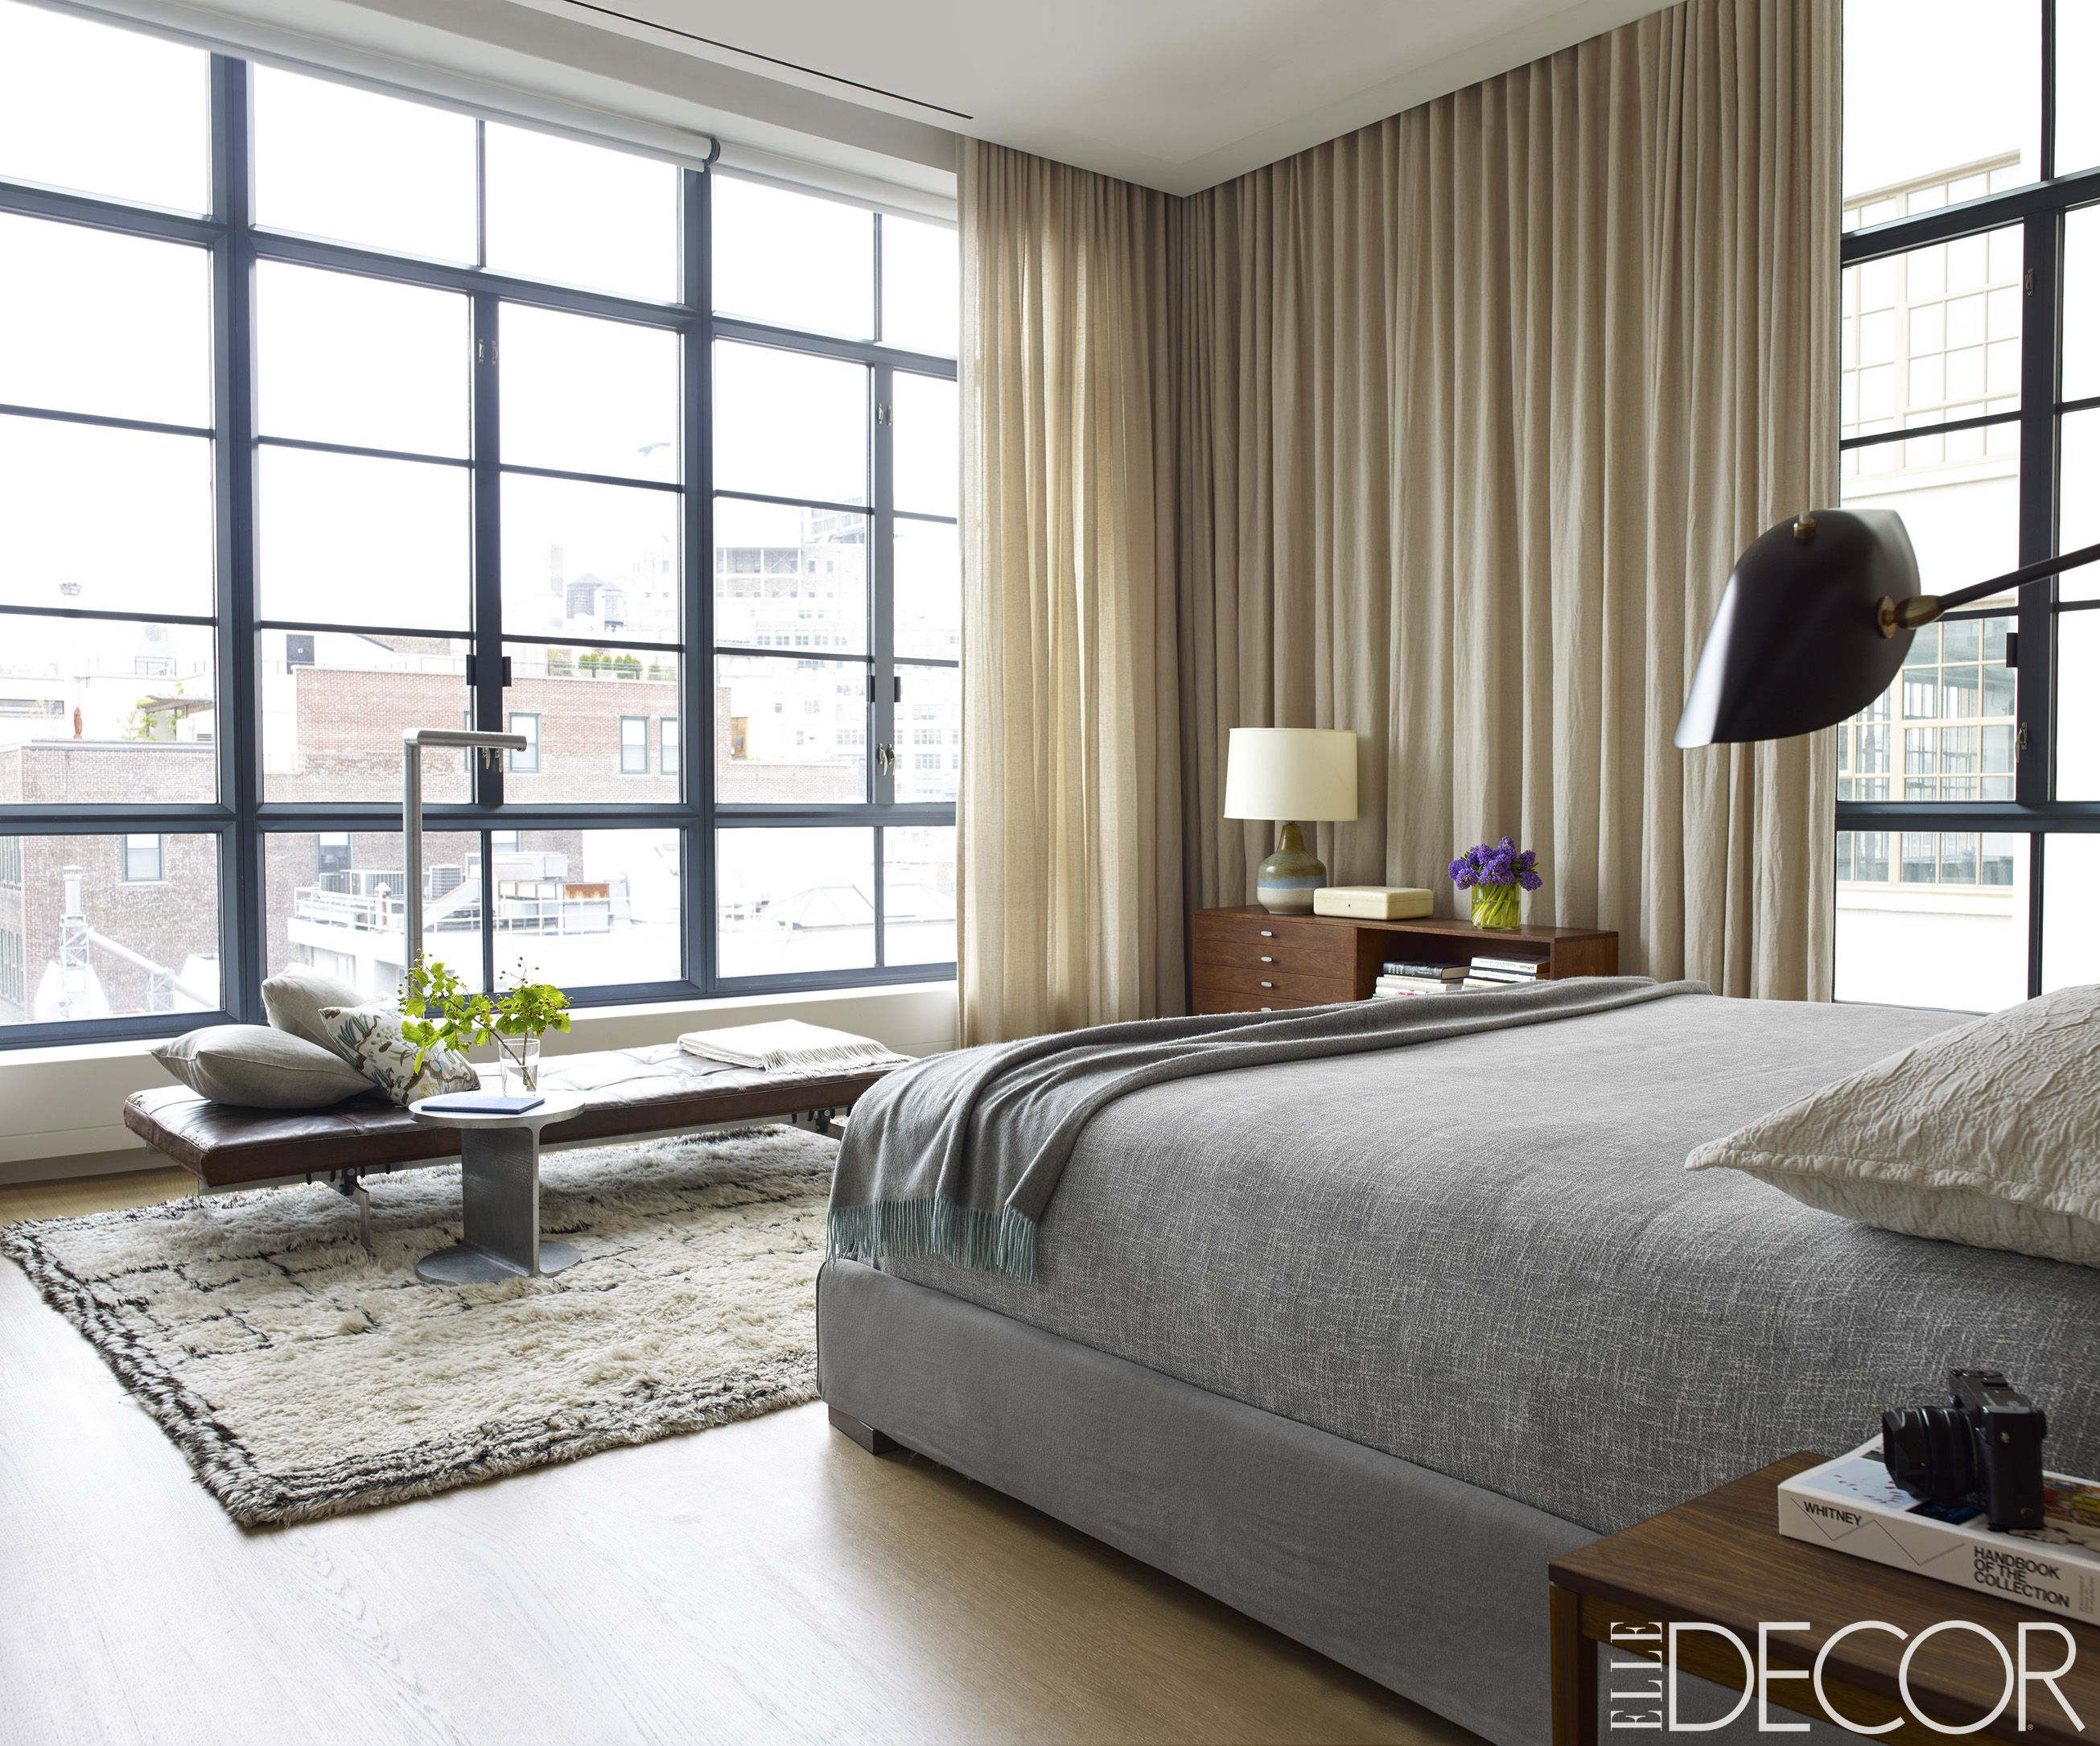 30 Minimalist Bedroom Decor Ideas Modern Designs For Minimalist regarding measurements 2610 X 2170